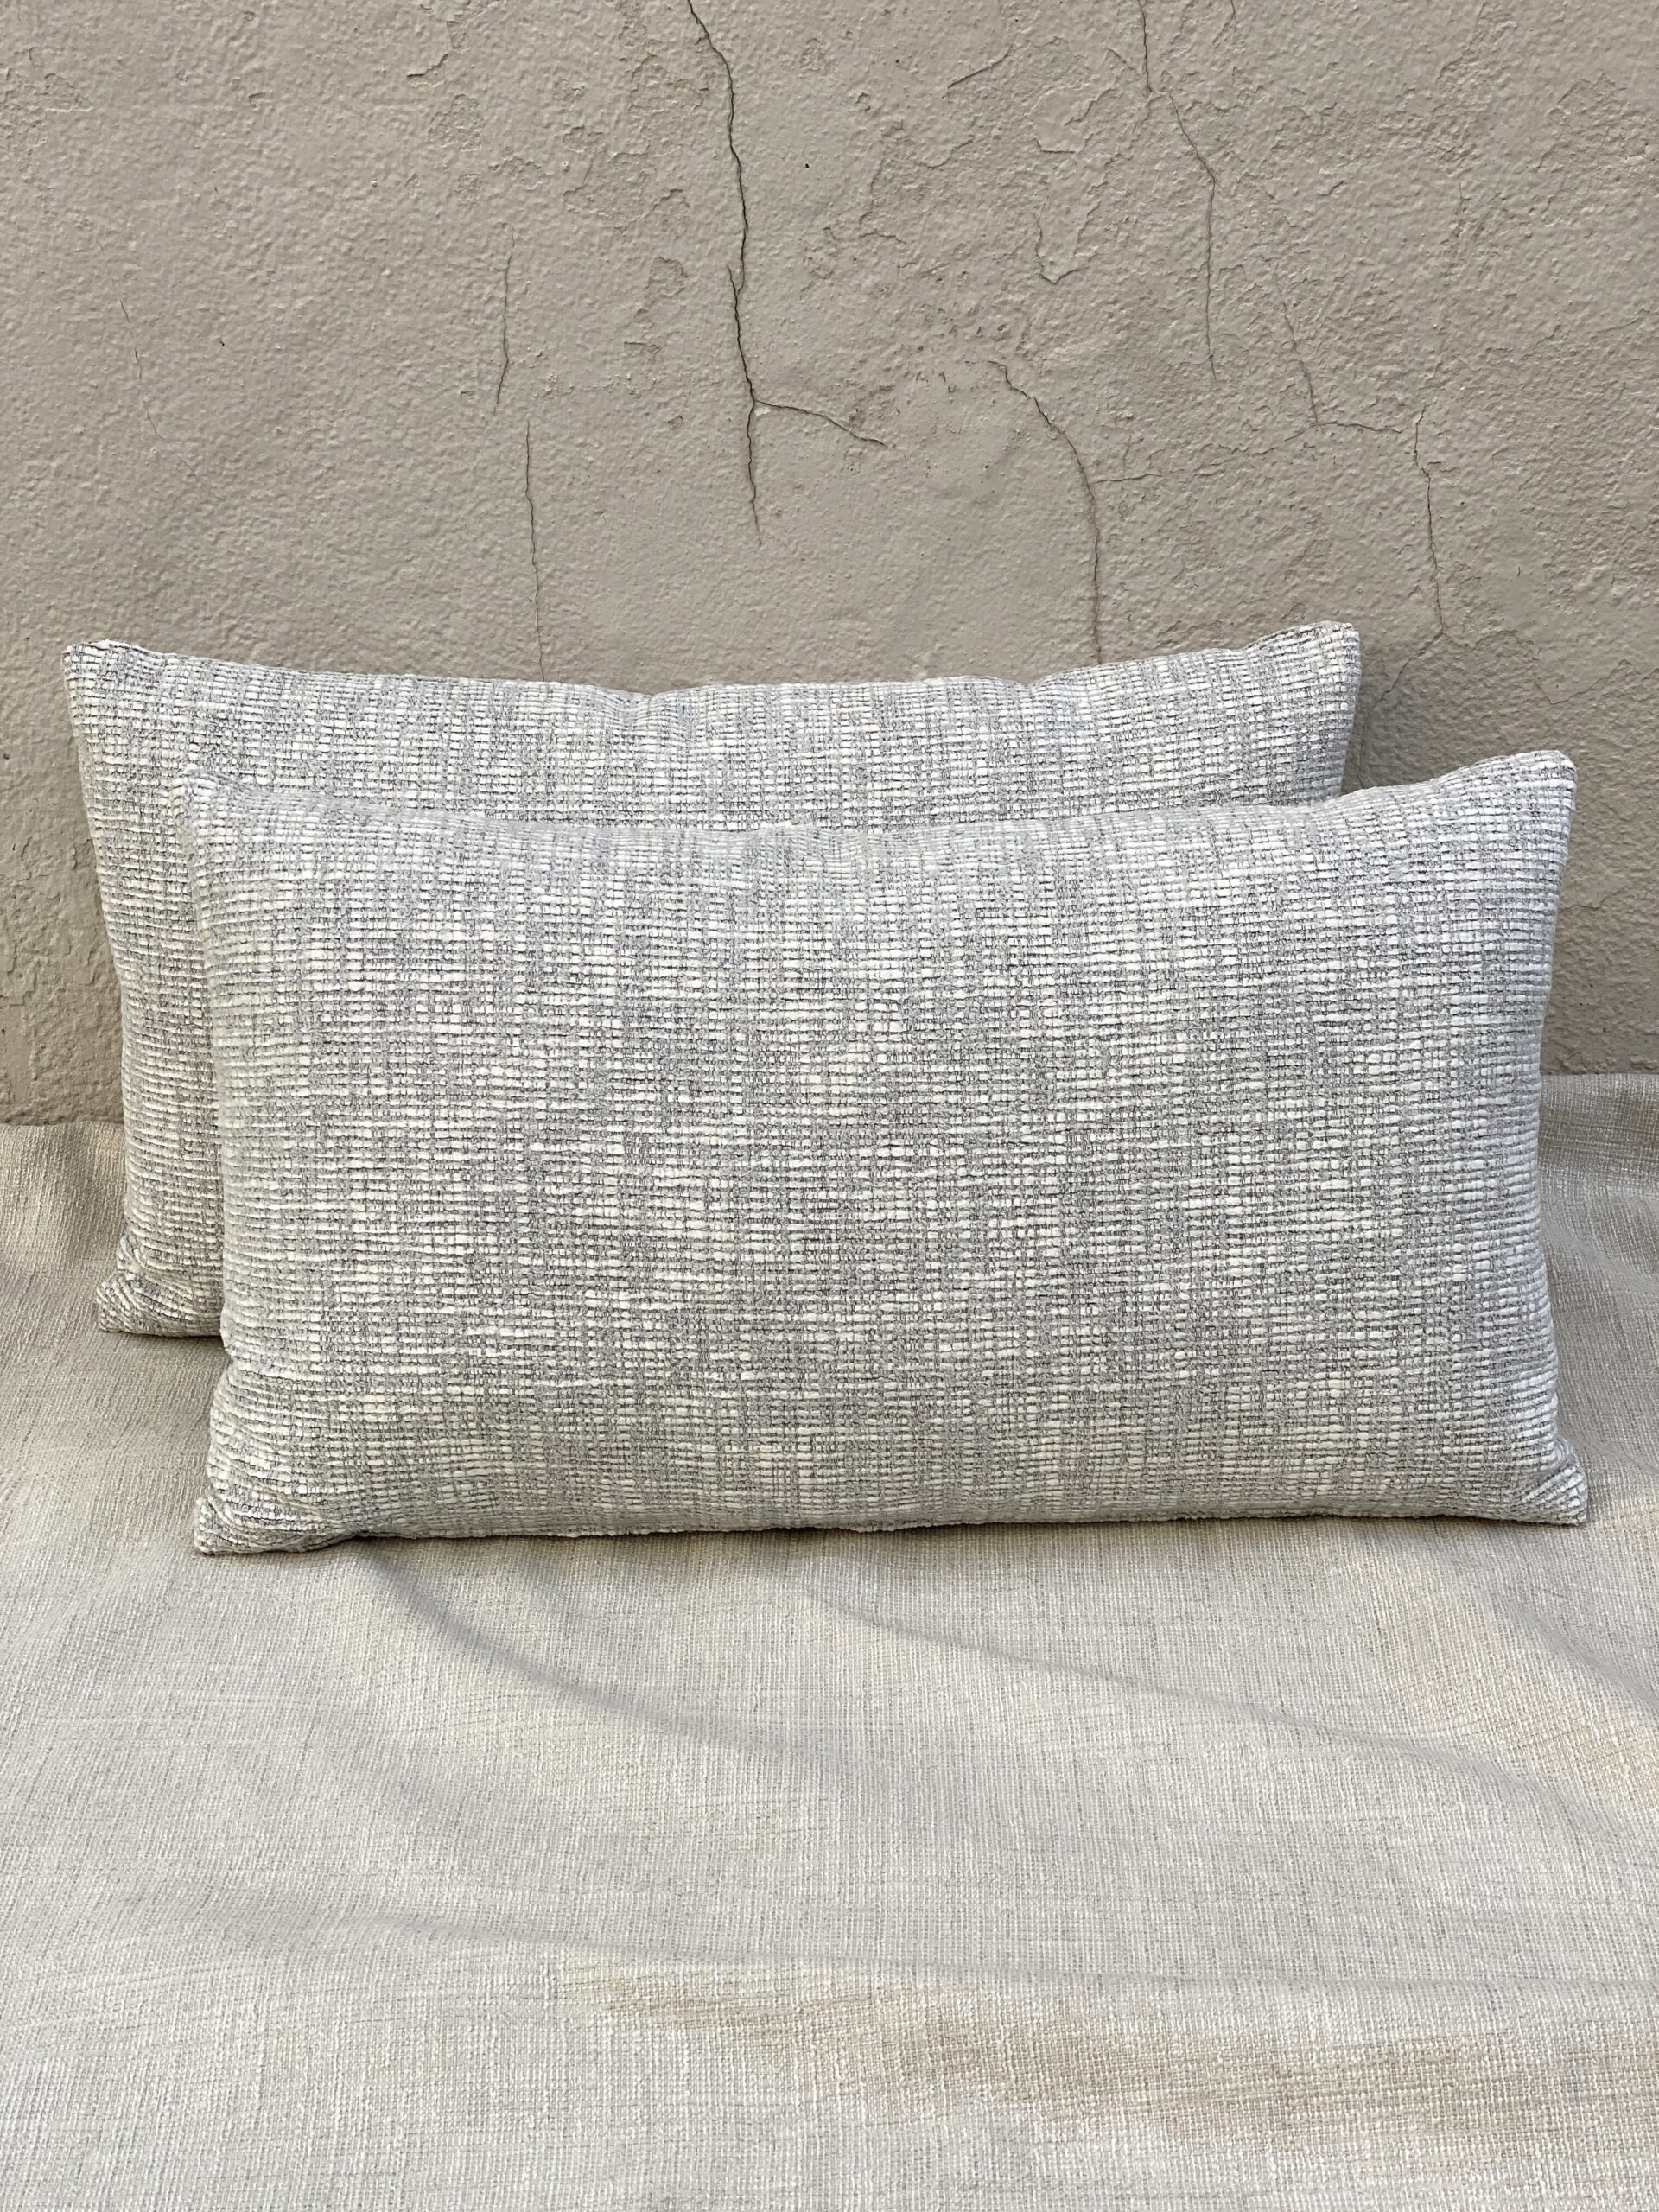 Zinc Hepworth Pillows